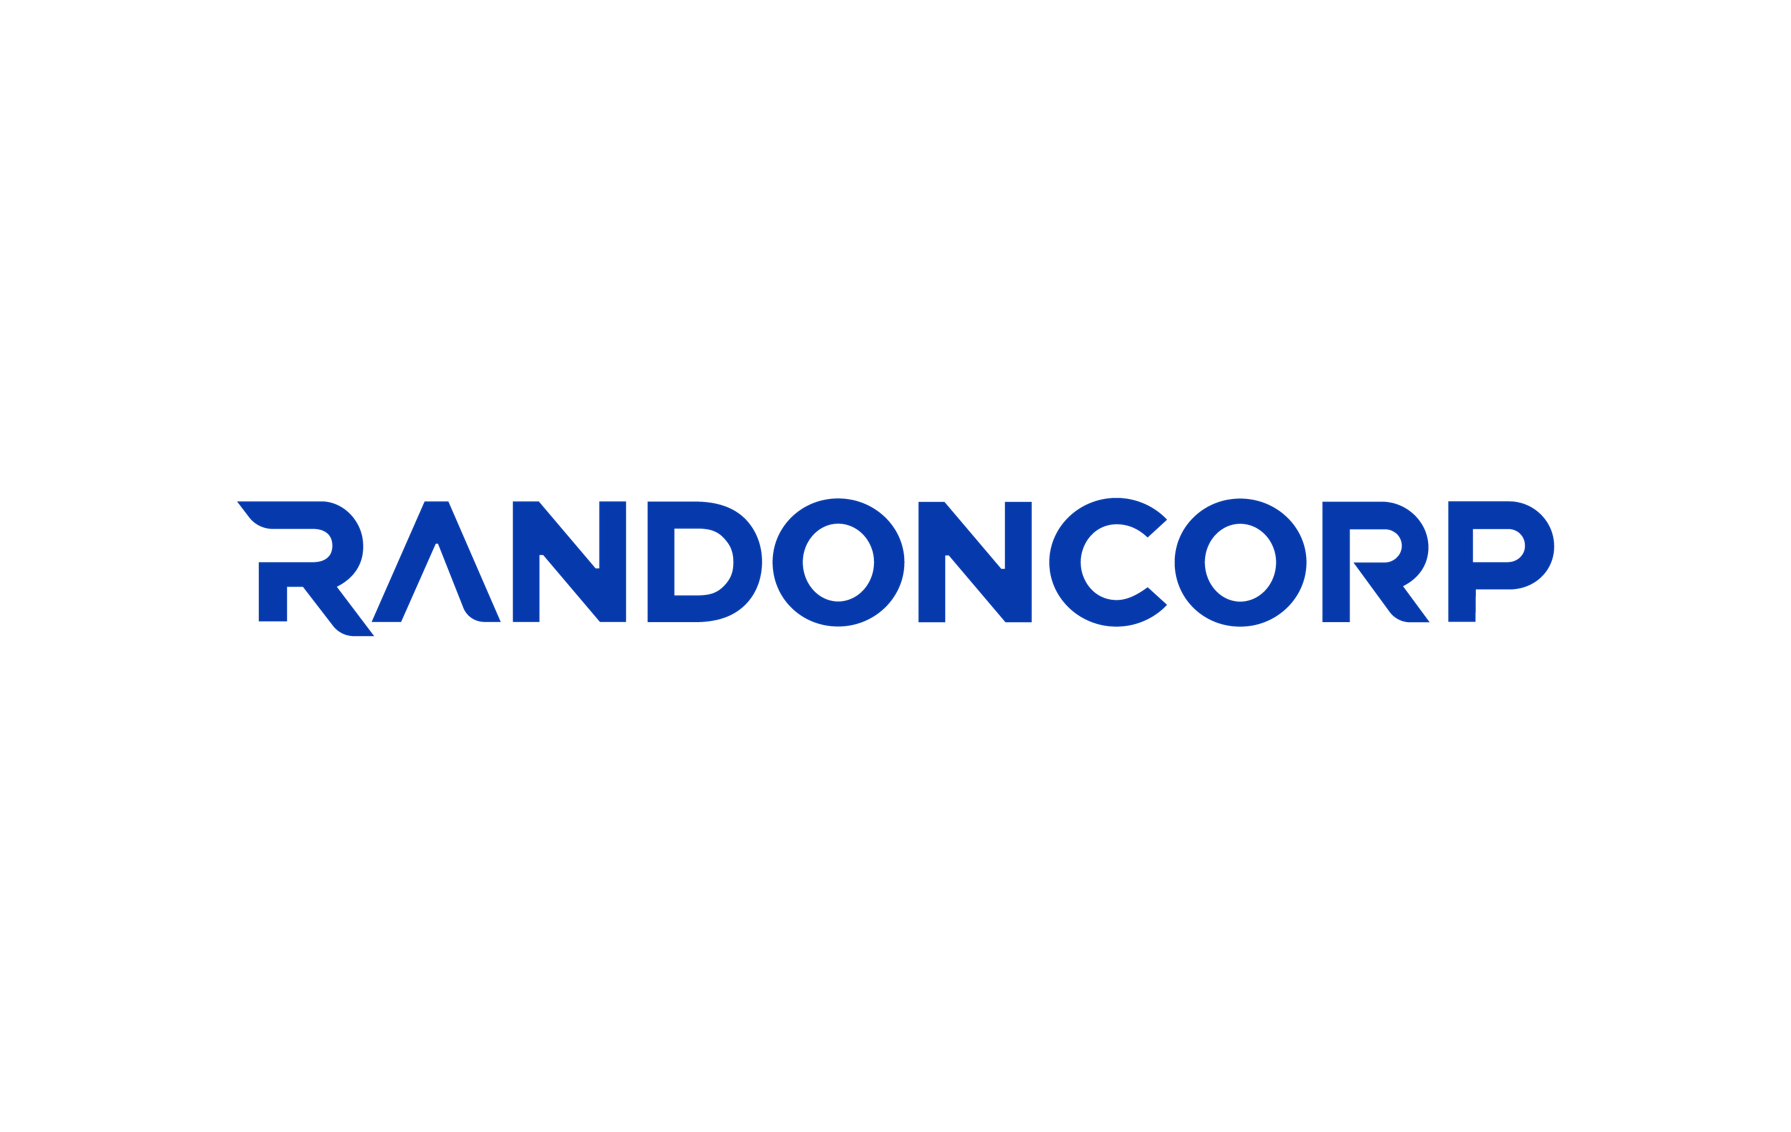 Randoncorp